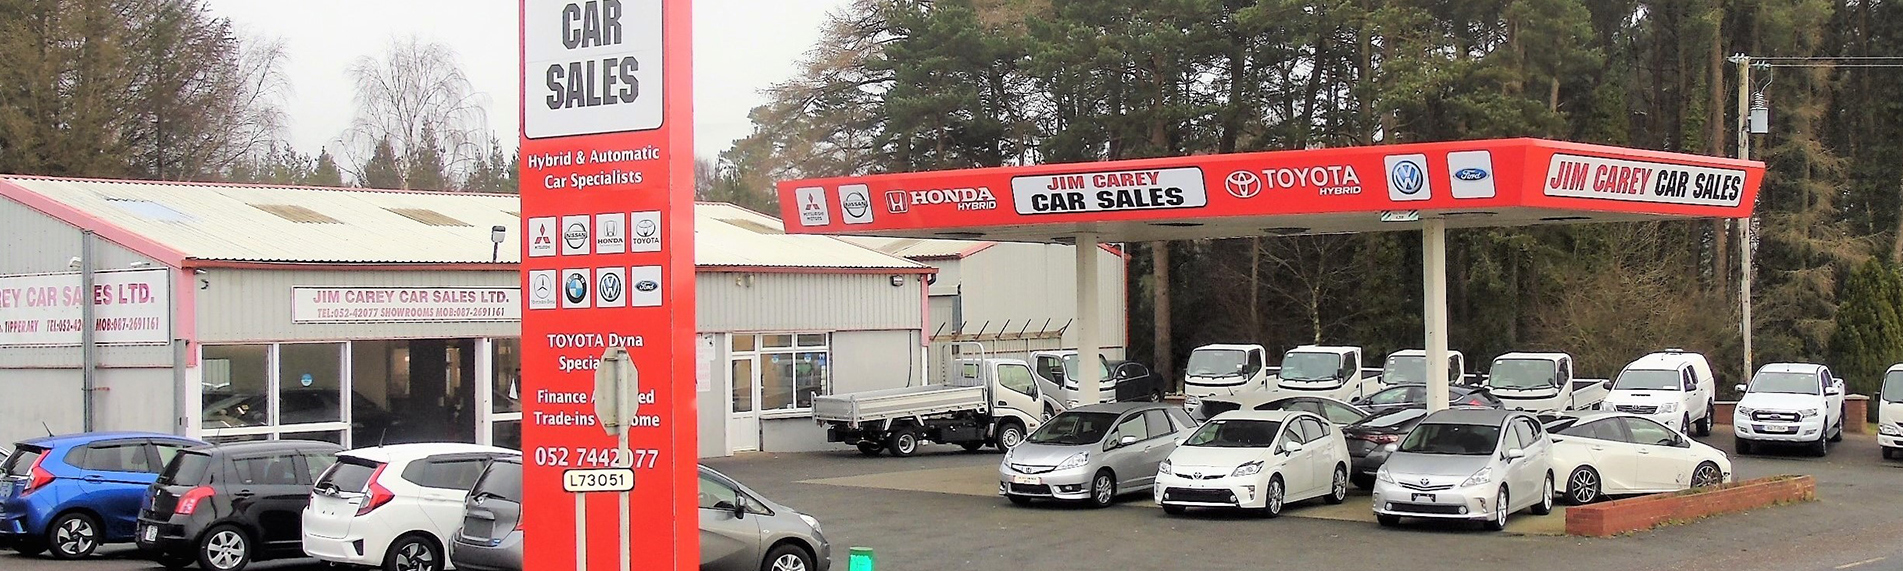 Jim Carey Car Sales